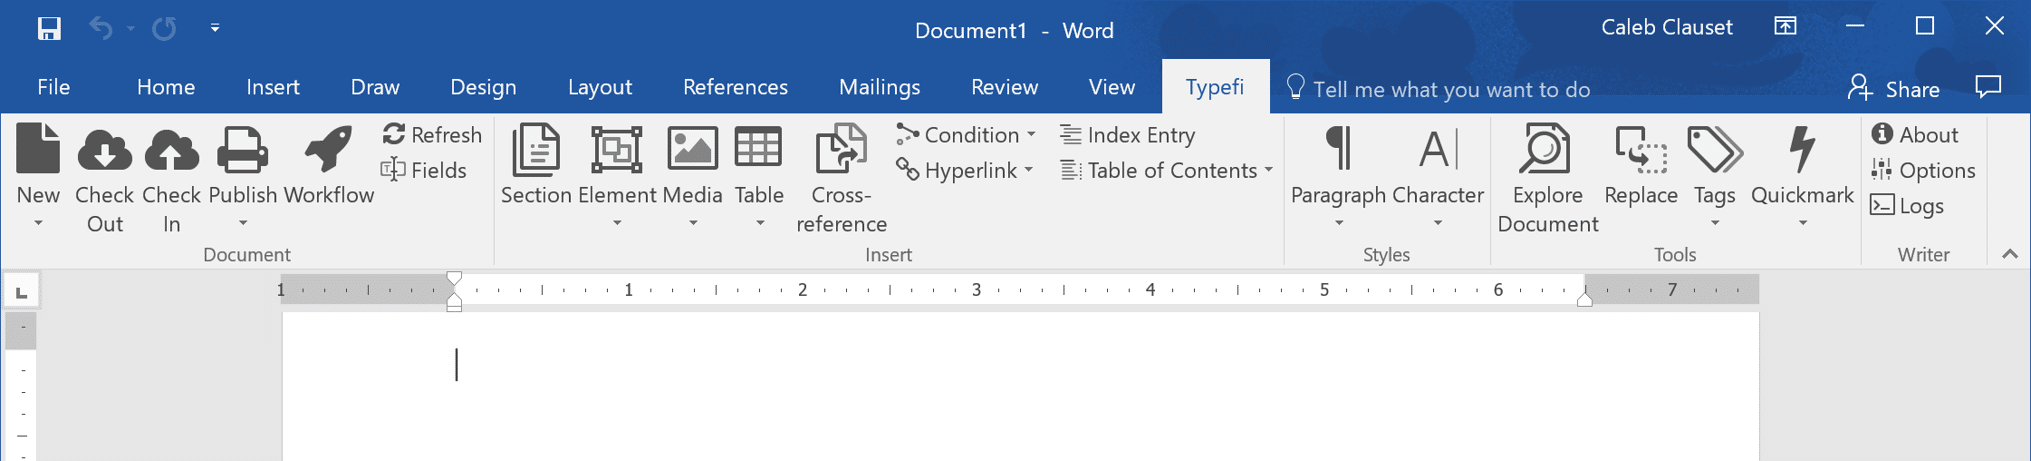 A screenshot of the Typefi Writer 8.4 ribbon in Microsoft Word.